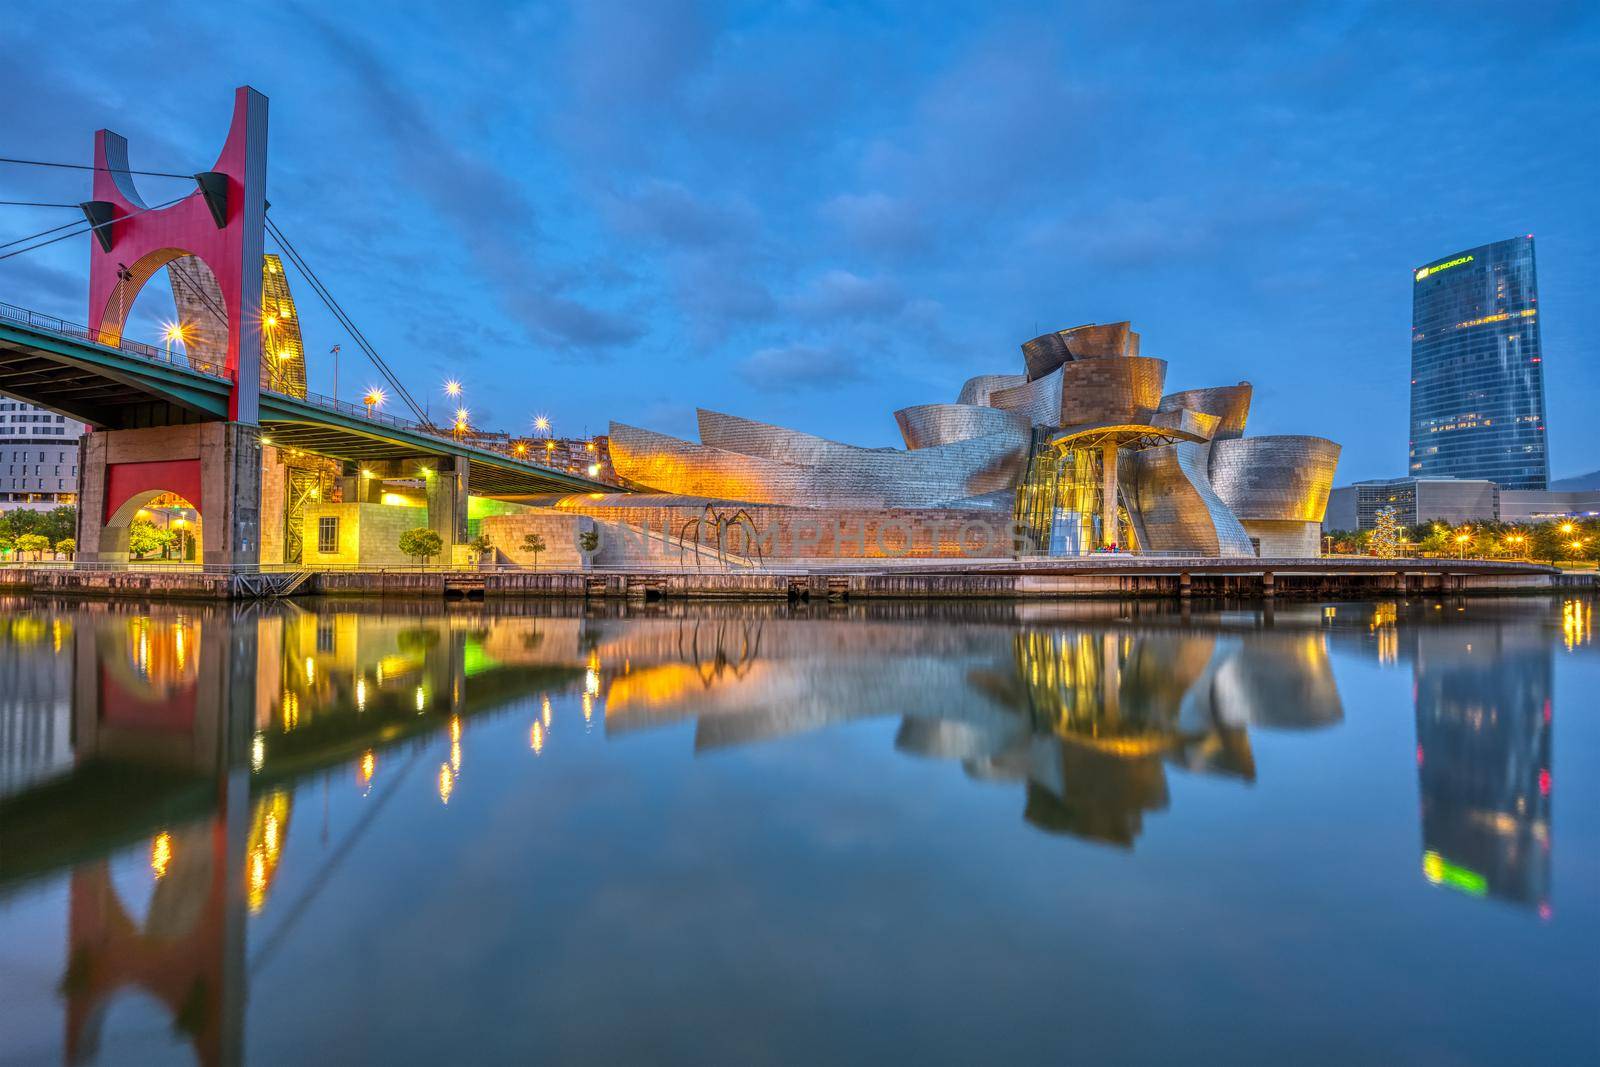 The futuristic Guggenheim Museum at dawn by elxeneize